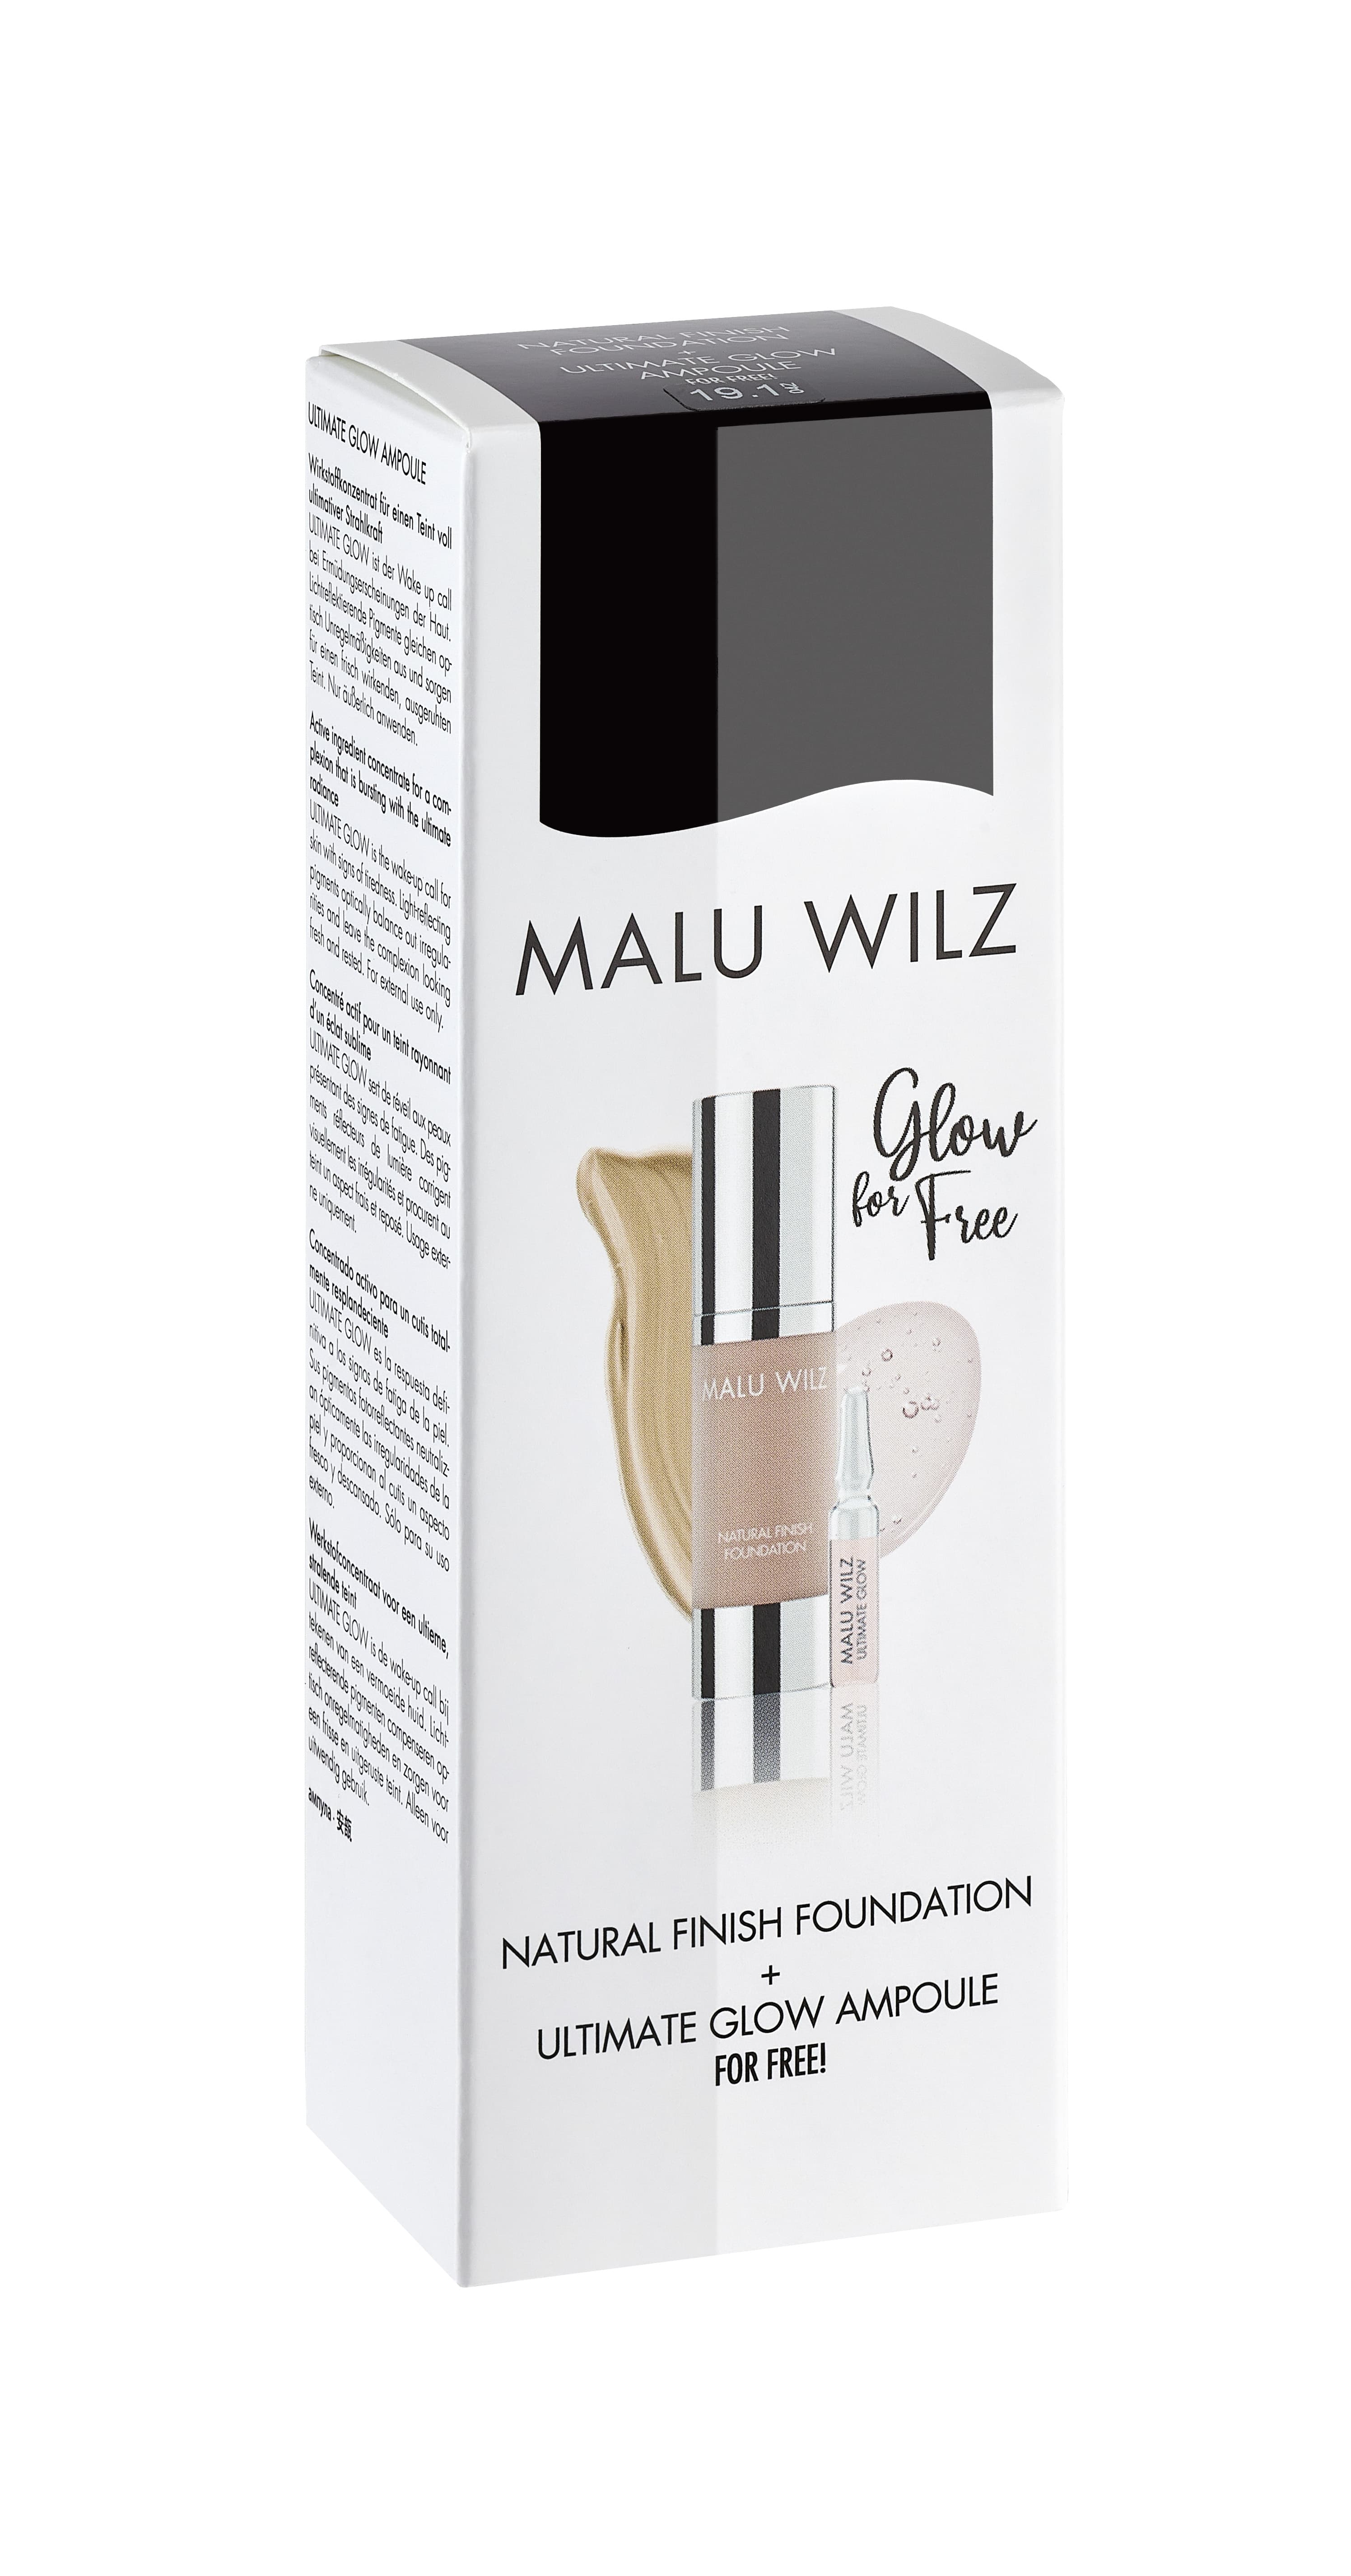 Malu Wilz Natural Finish Foundation 13 glow edition